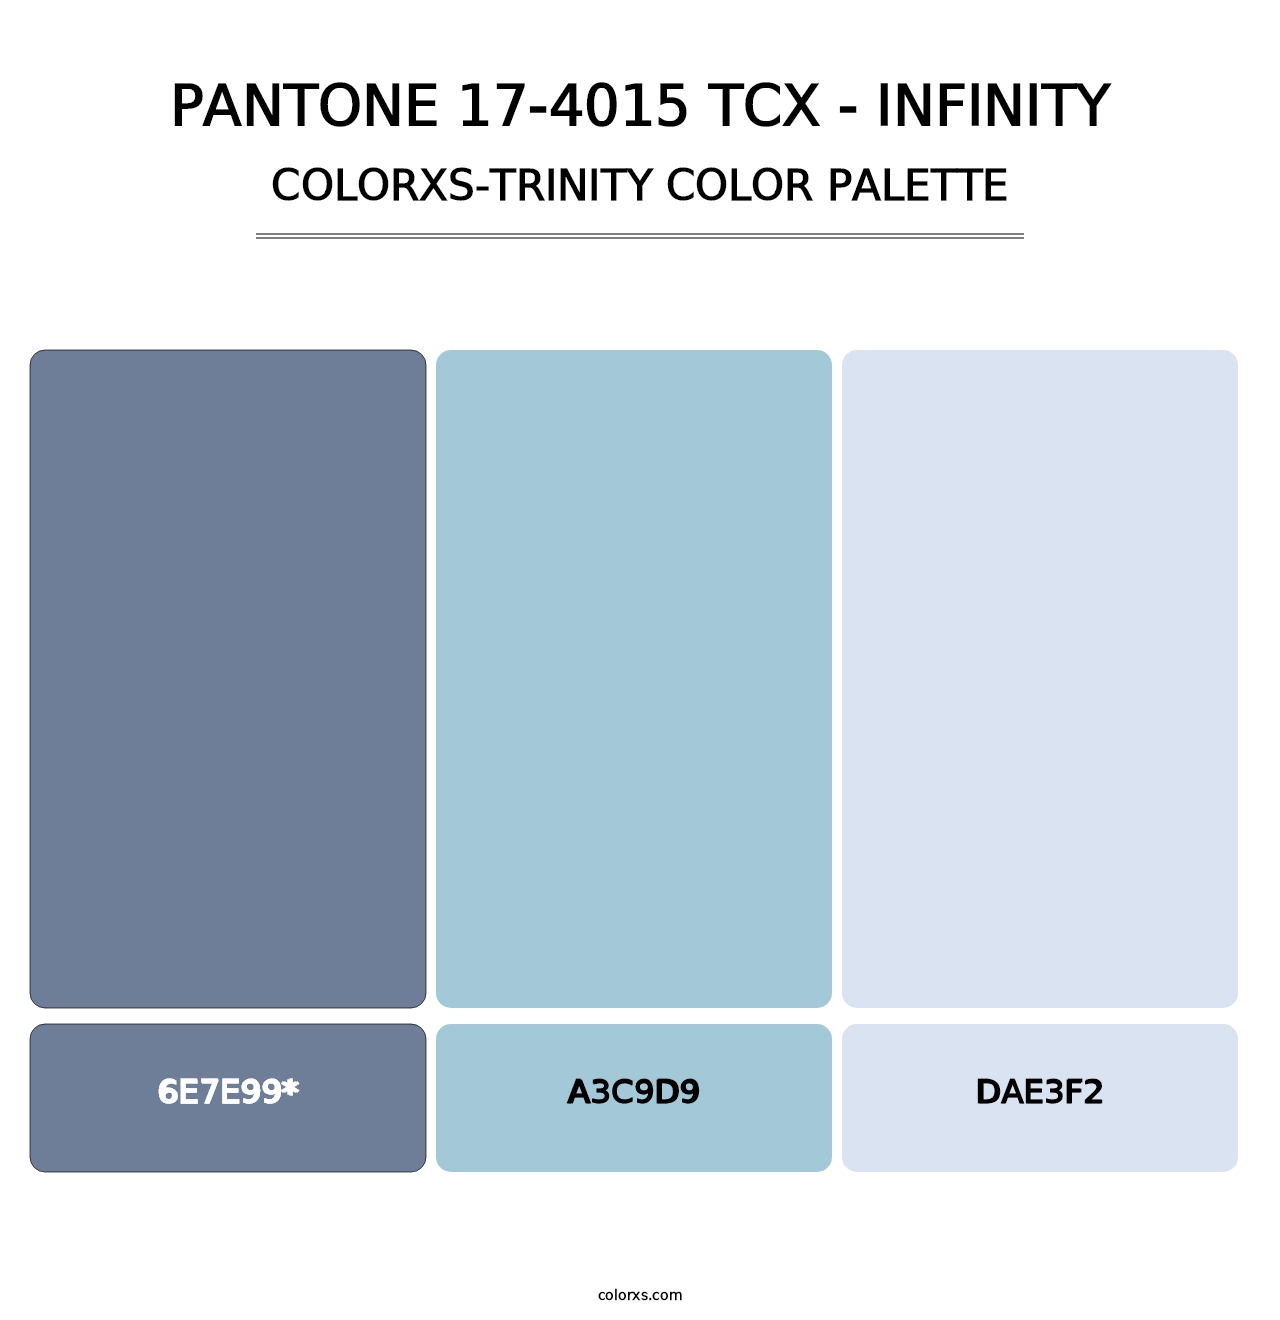 PANTONE 17-4015 TCX - Infinity - Colorxs Trinity Palette